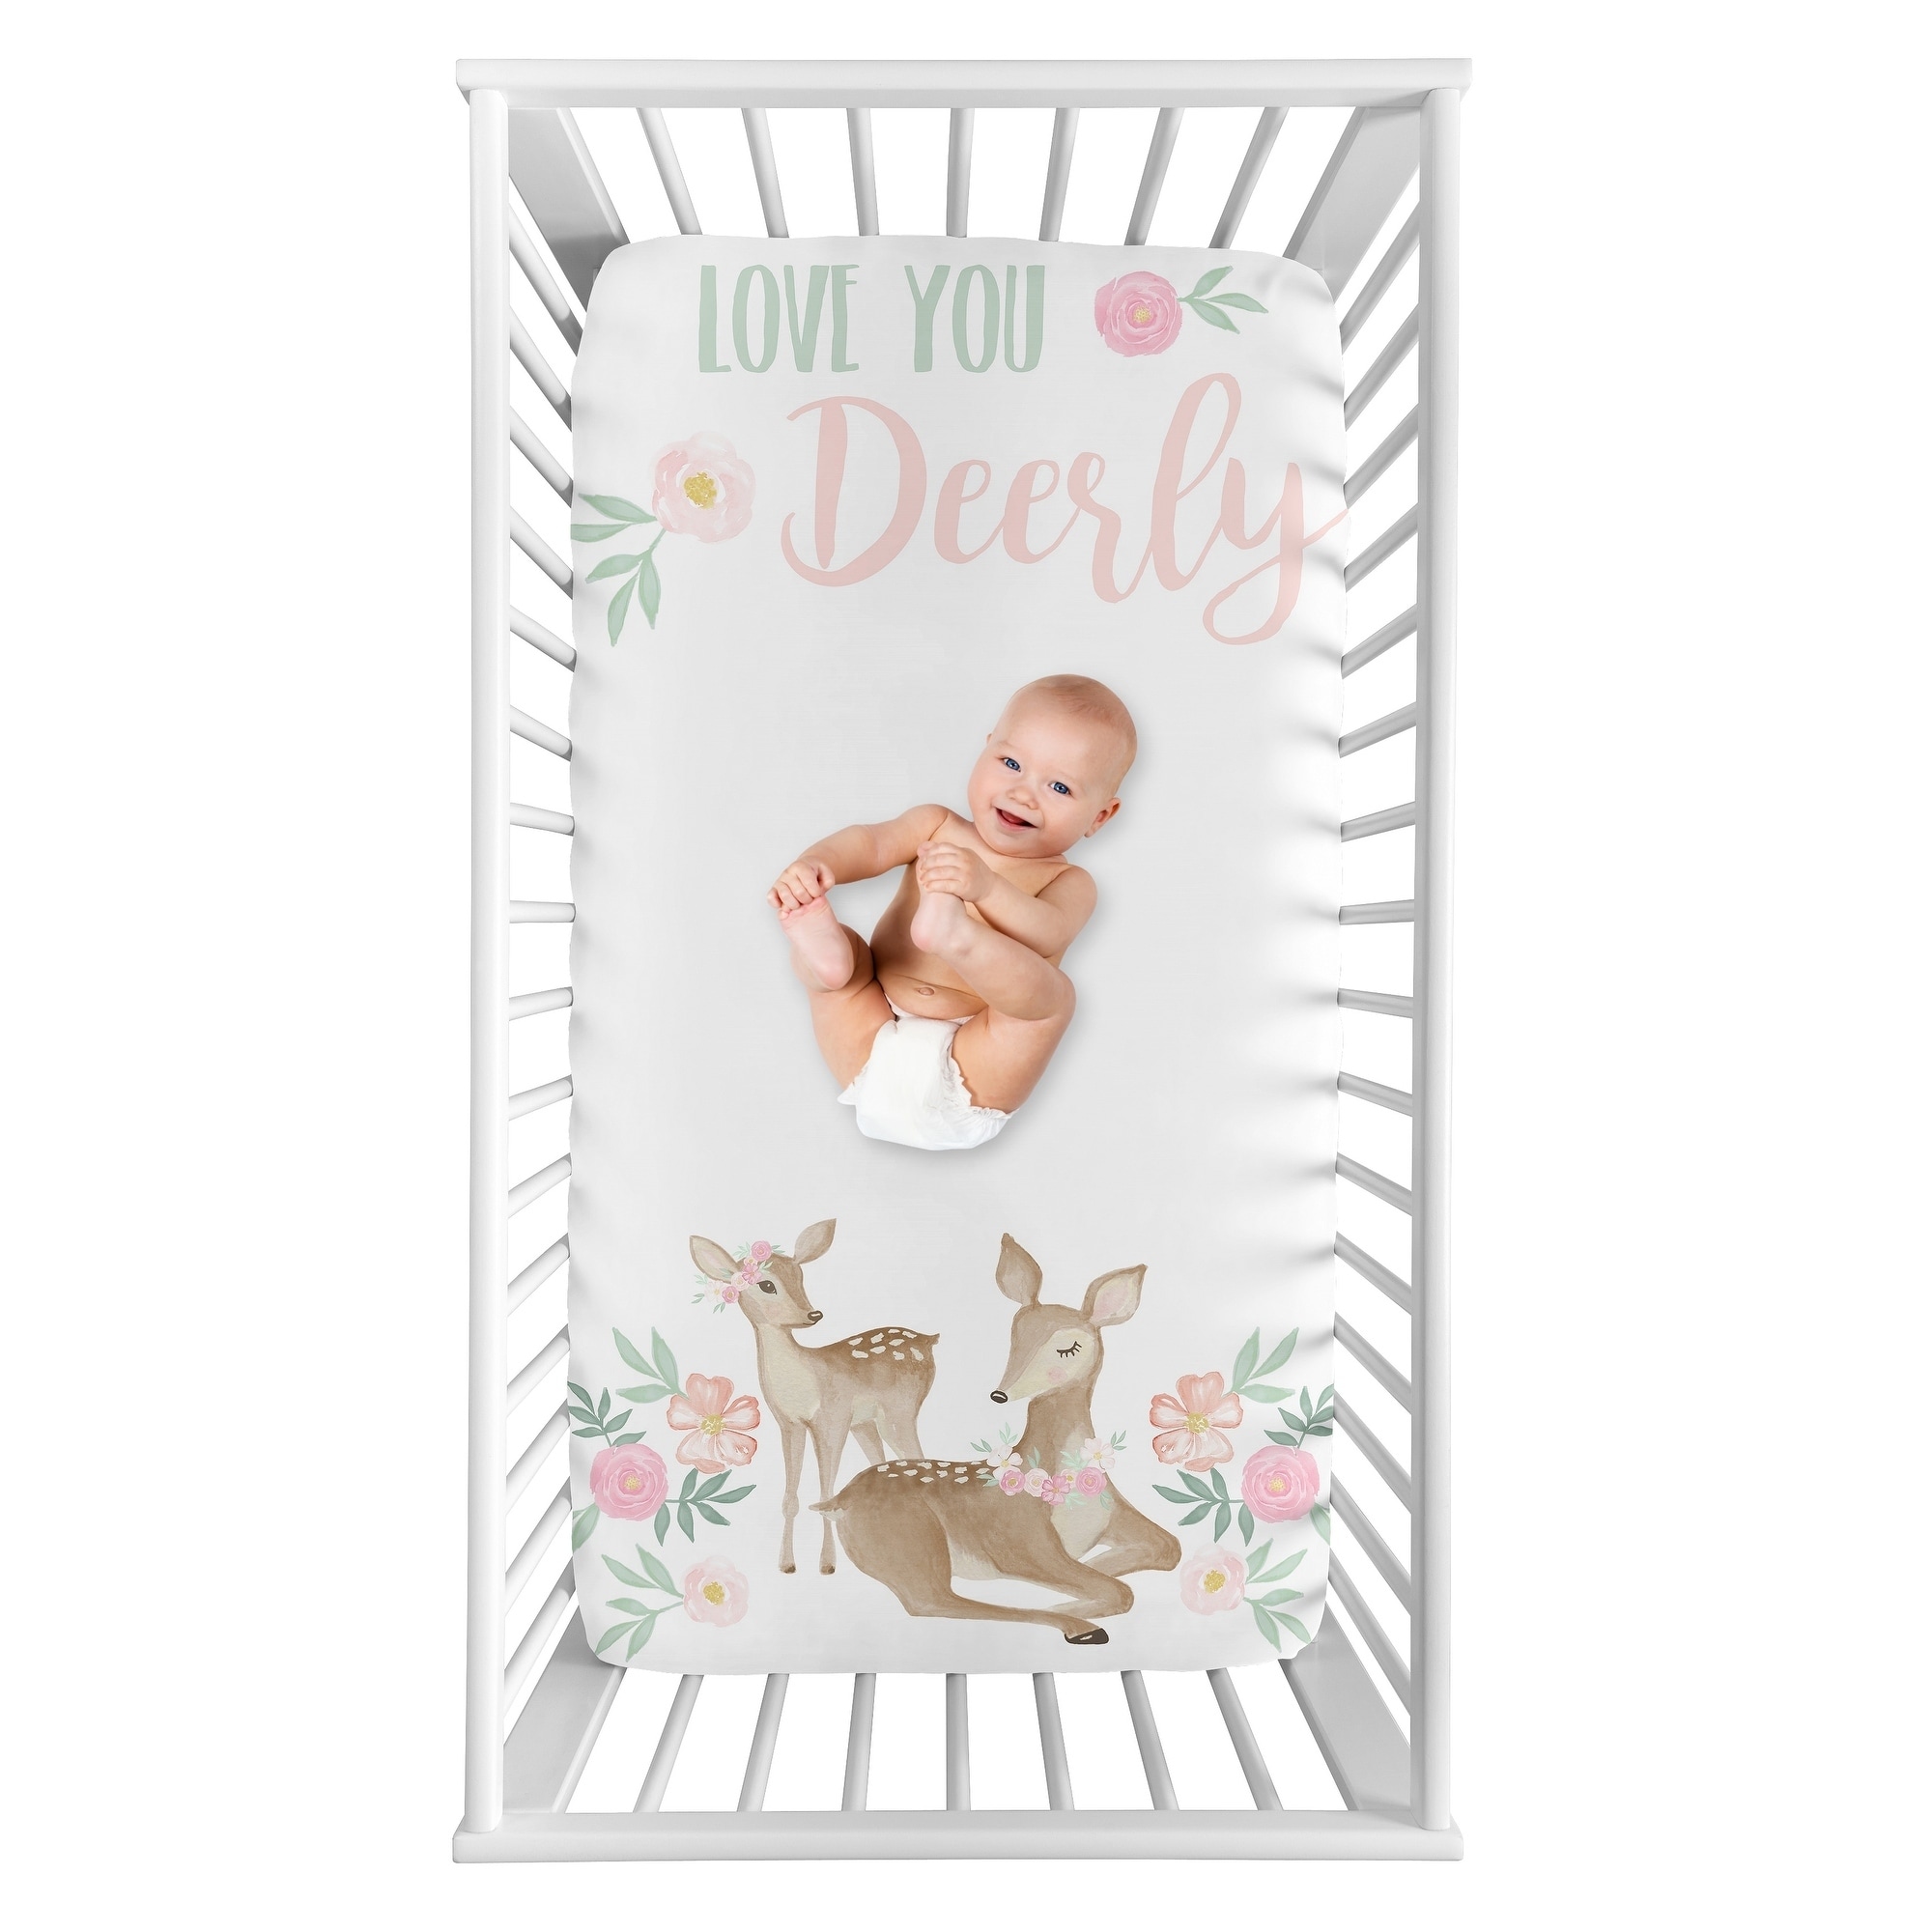 Sweet Jojo Designs Woodland Deer Floral Girl Photo Op Fitted Crib Sheet Blush Pink Mint Green Boho Watercolor Love You Deerly Overstock